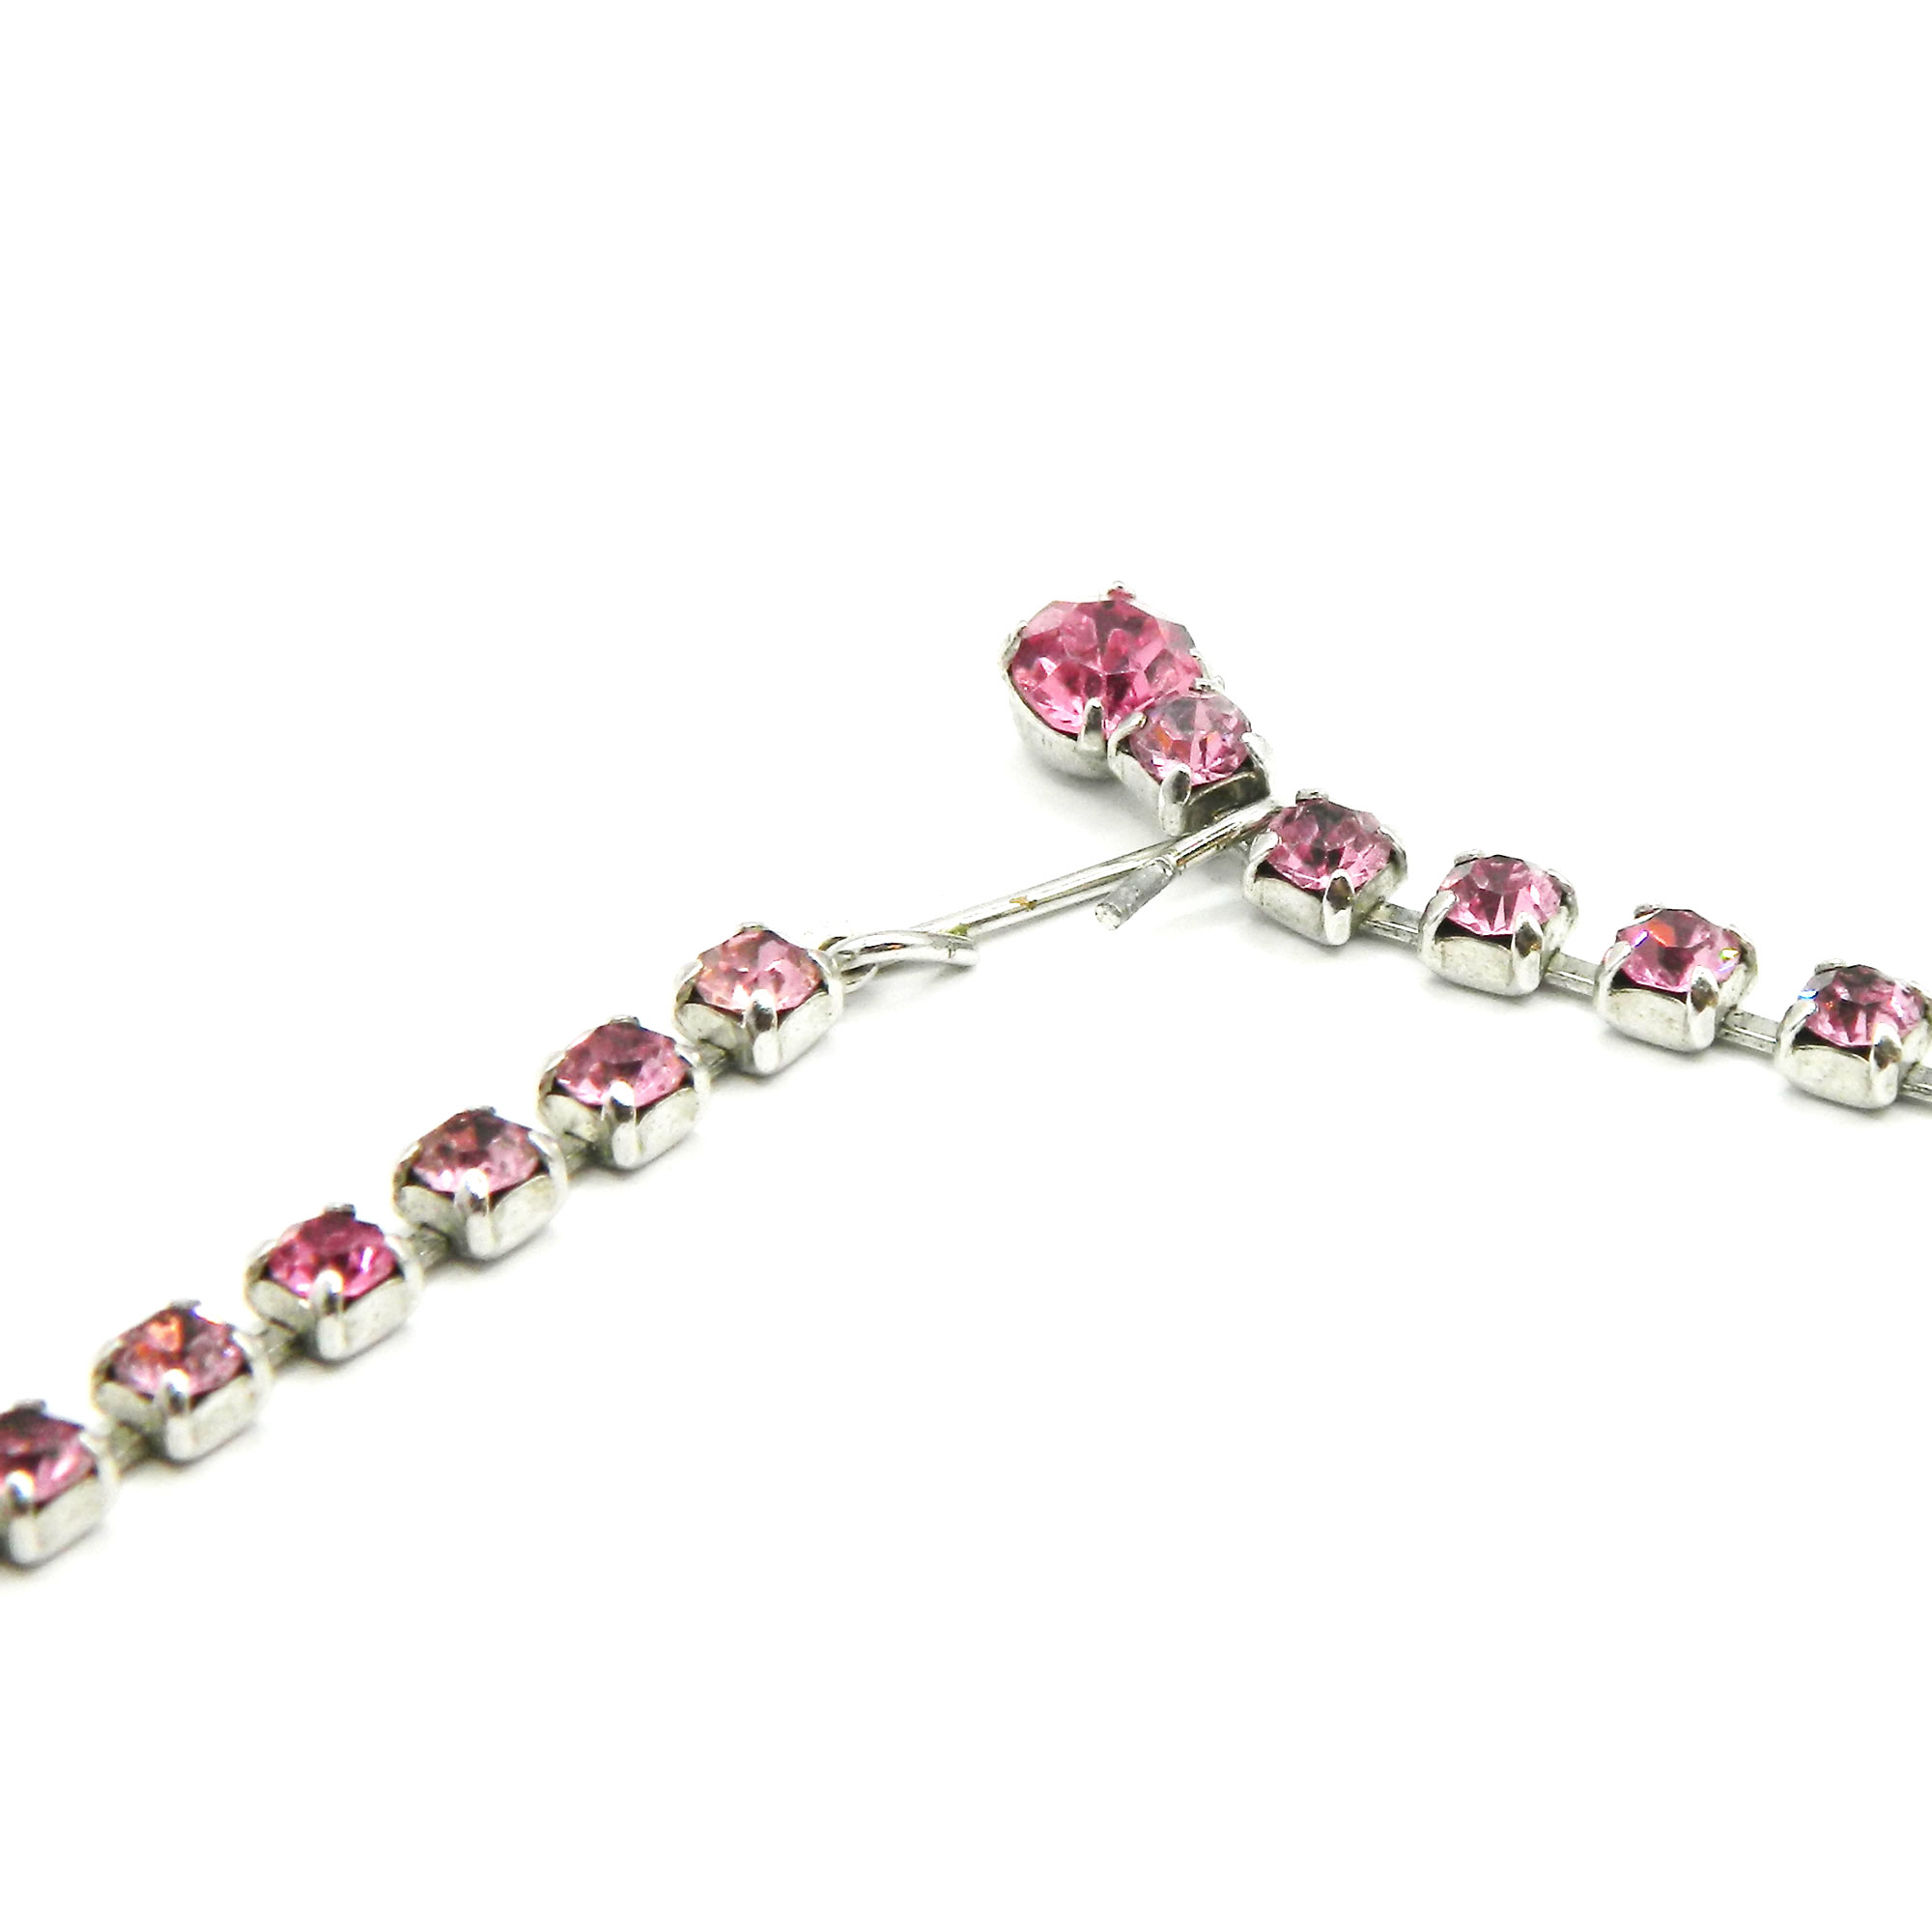 1950s pink rhinestone necklace